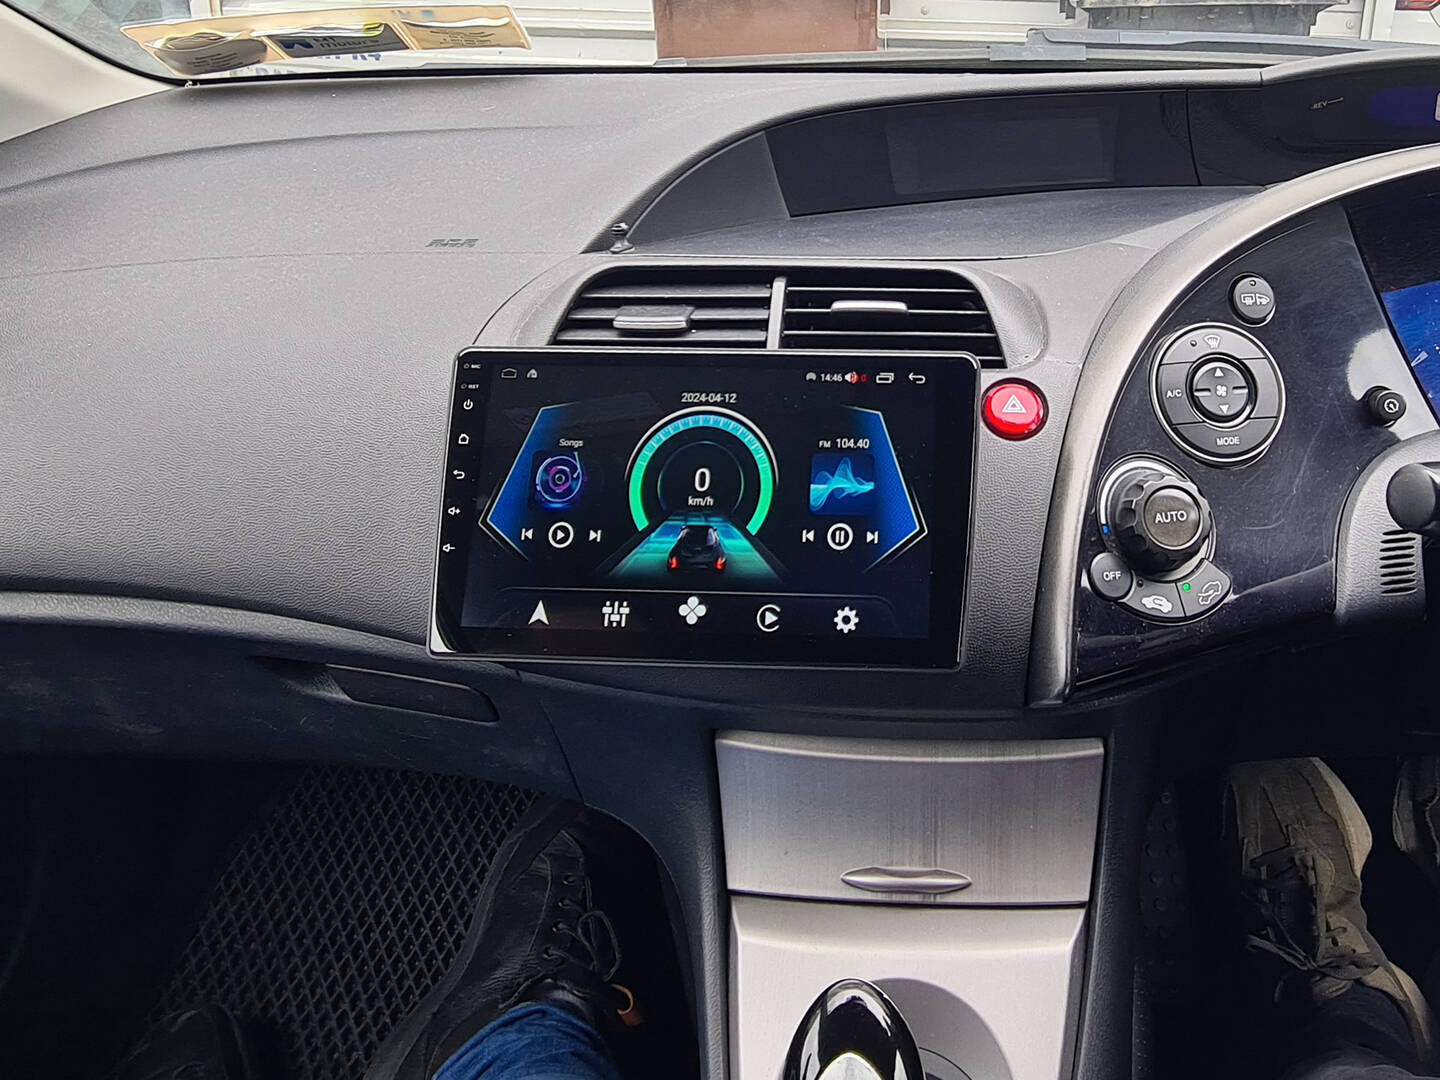 ог scaled - Radio King Ireland - Android Car Radios and CarPlay Systems